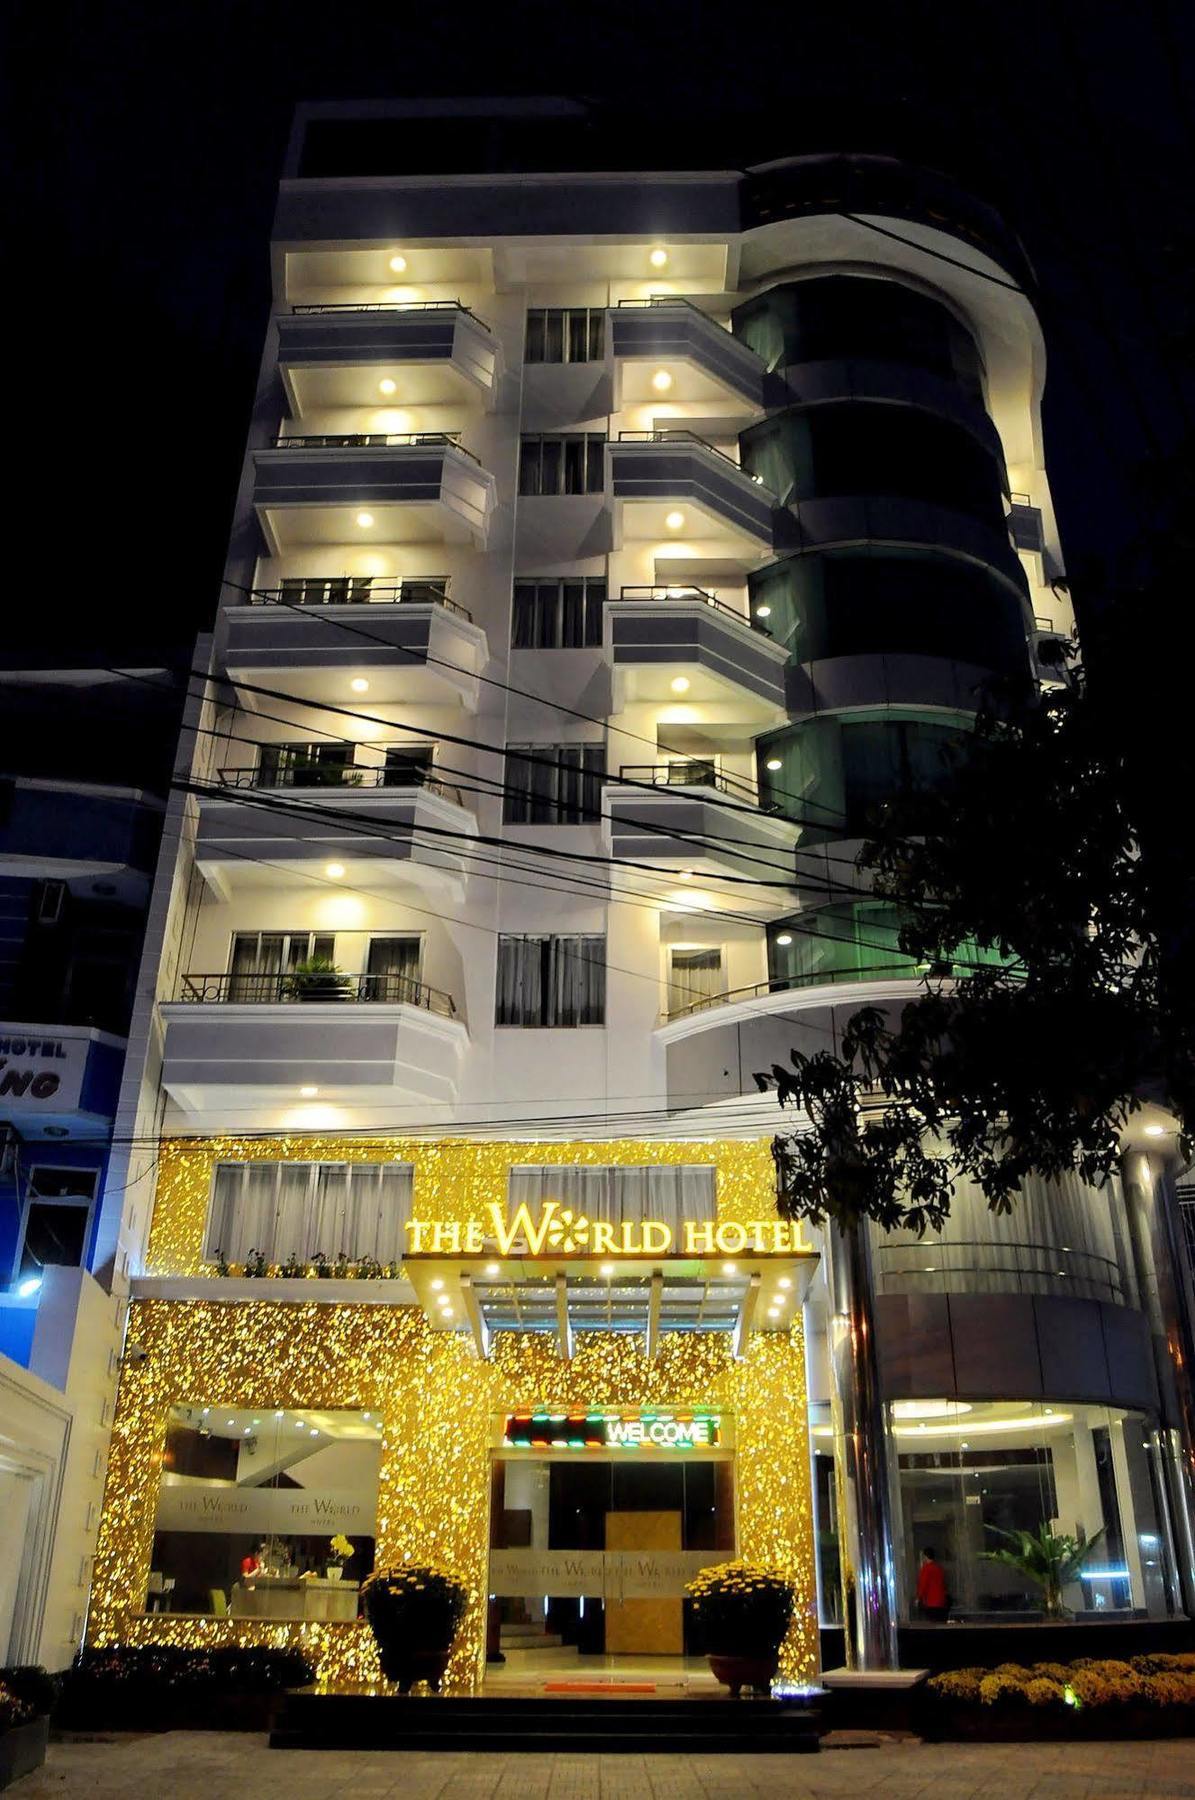 Camellia Nhatrang Hotel Nha Trang Zewnętrze zdjęcie